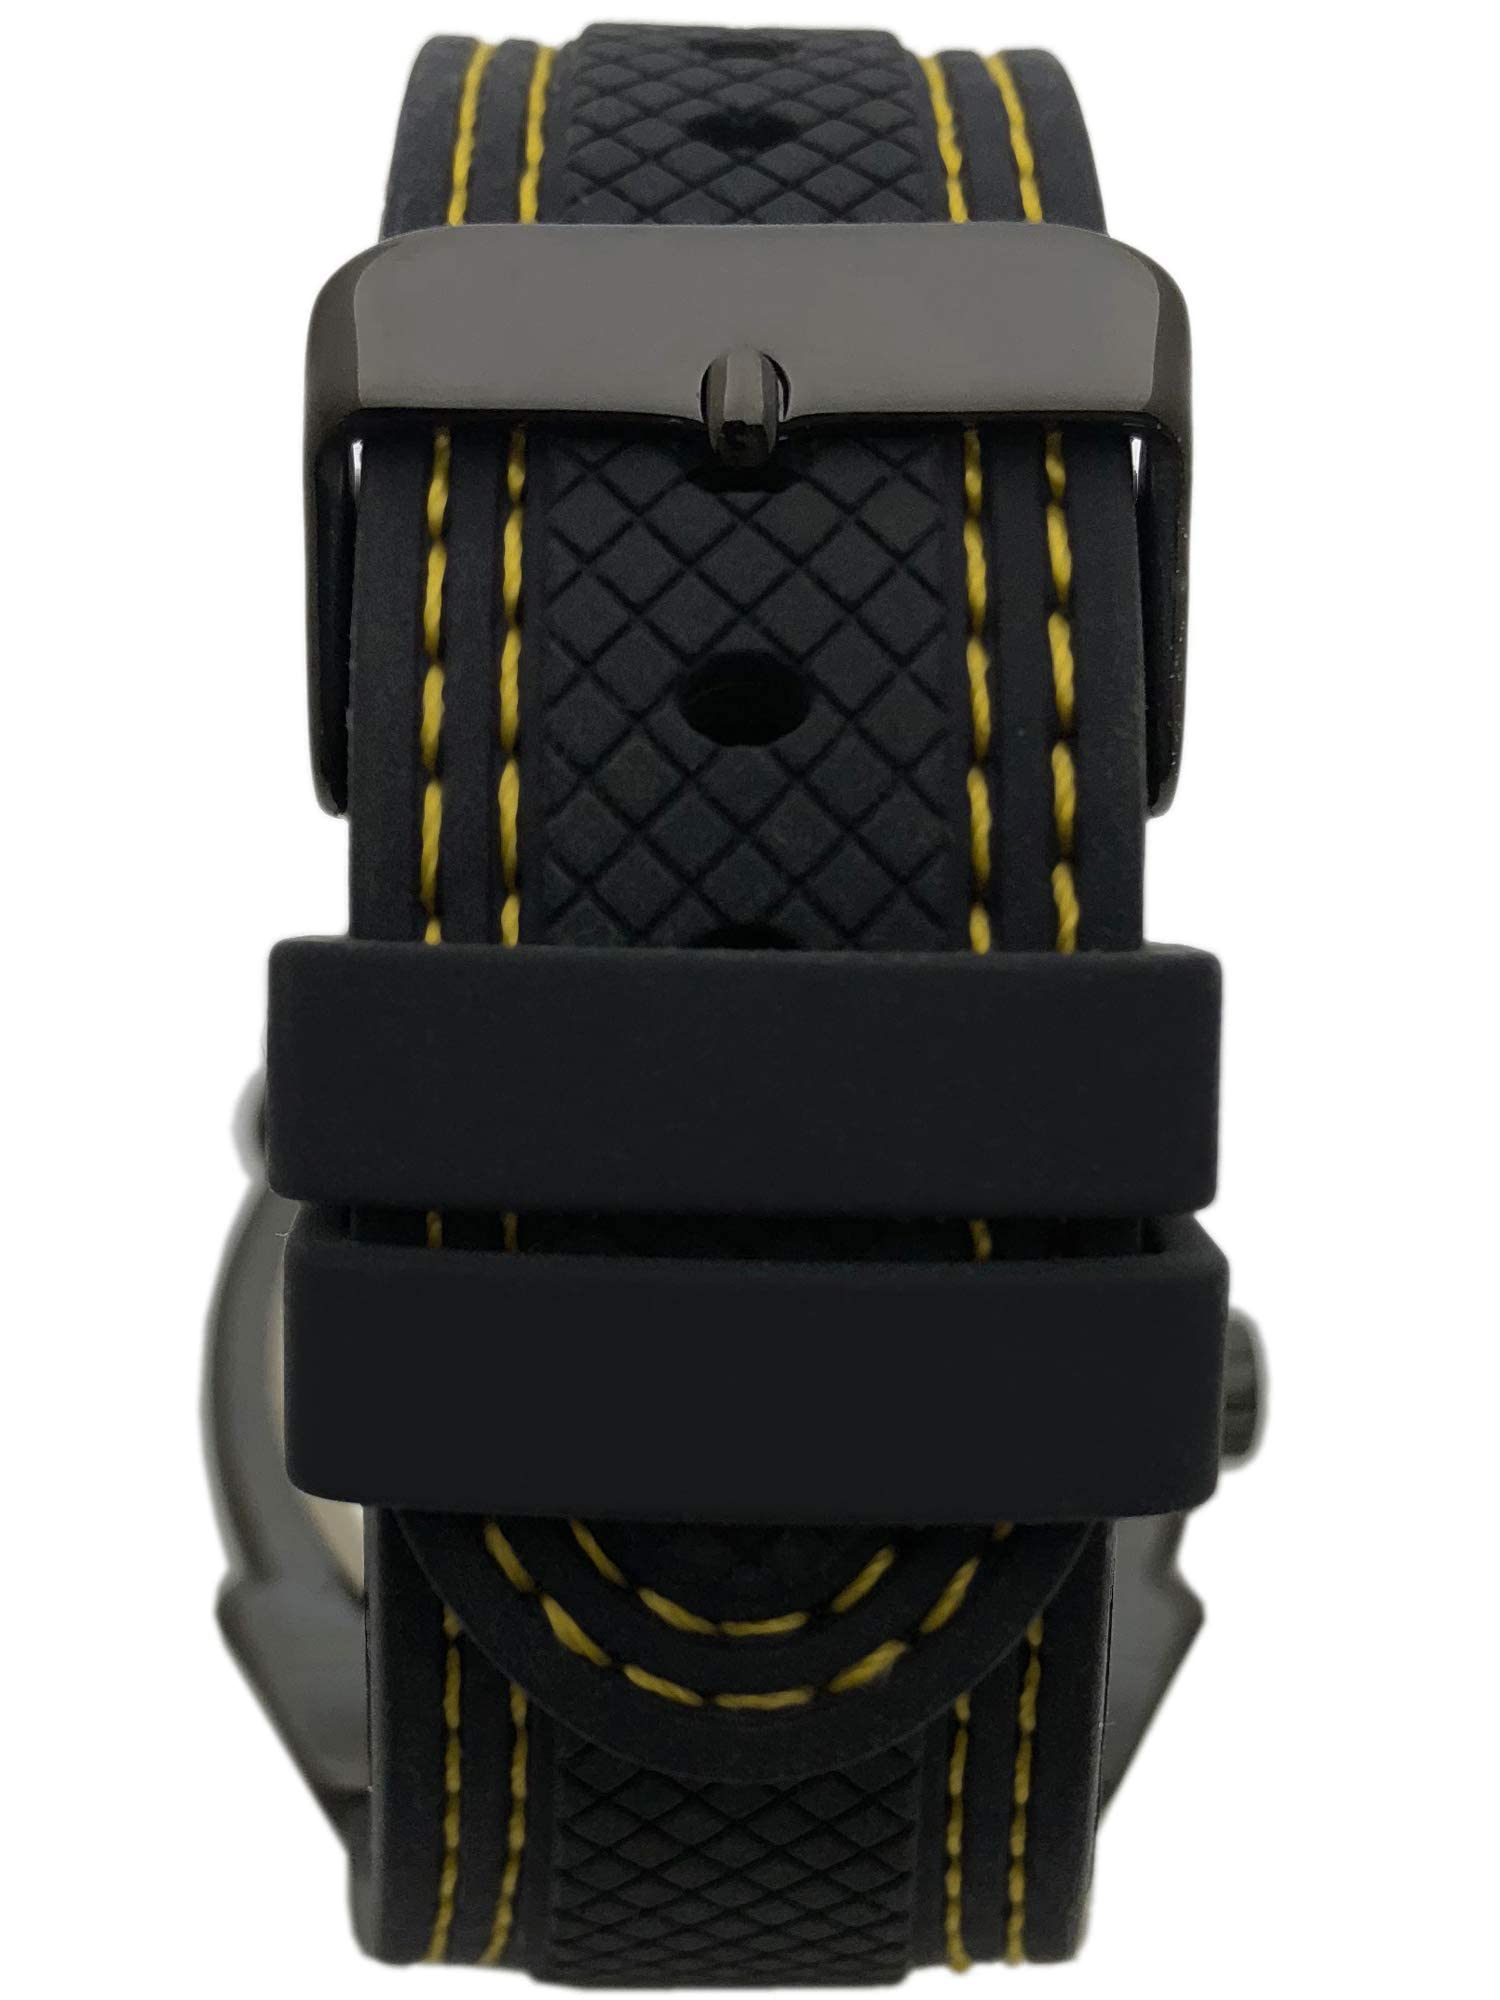 Peugeot Men Water Resistant Sports Watch with Calendar & Black Rubber Strap